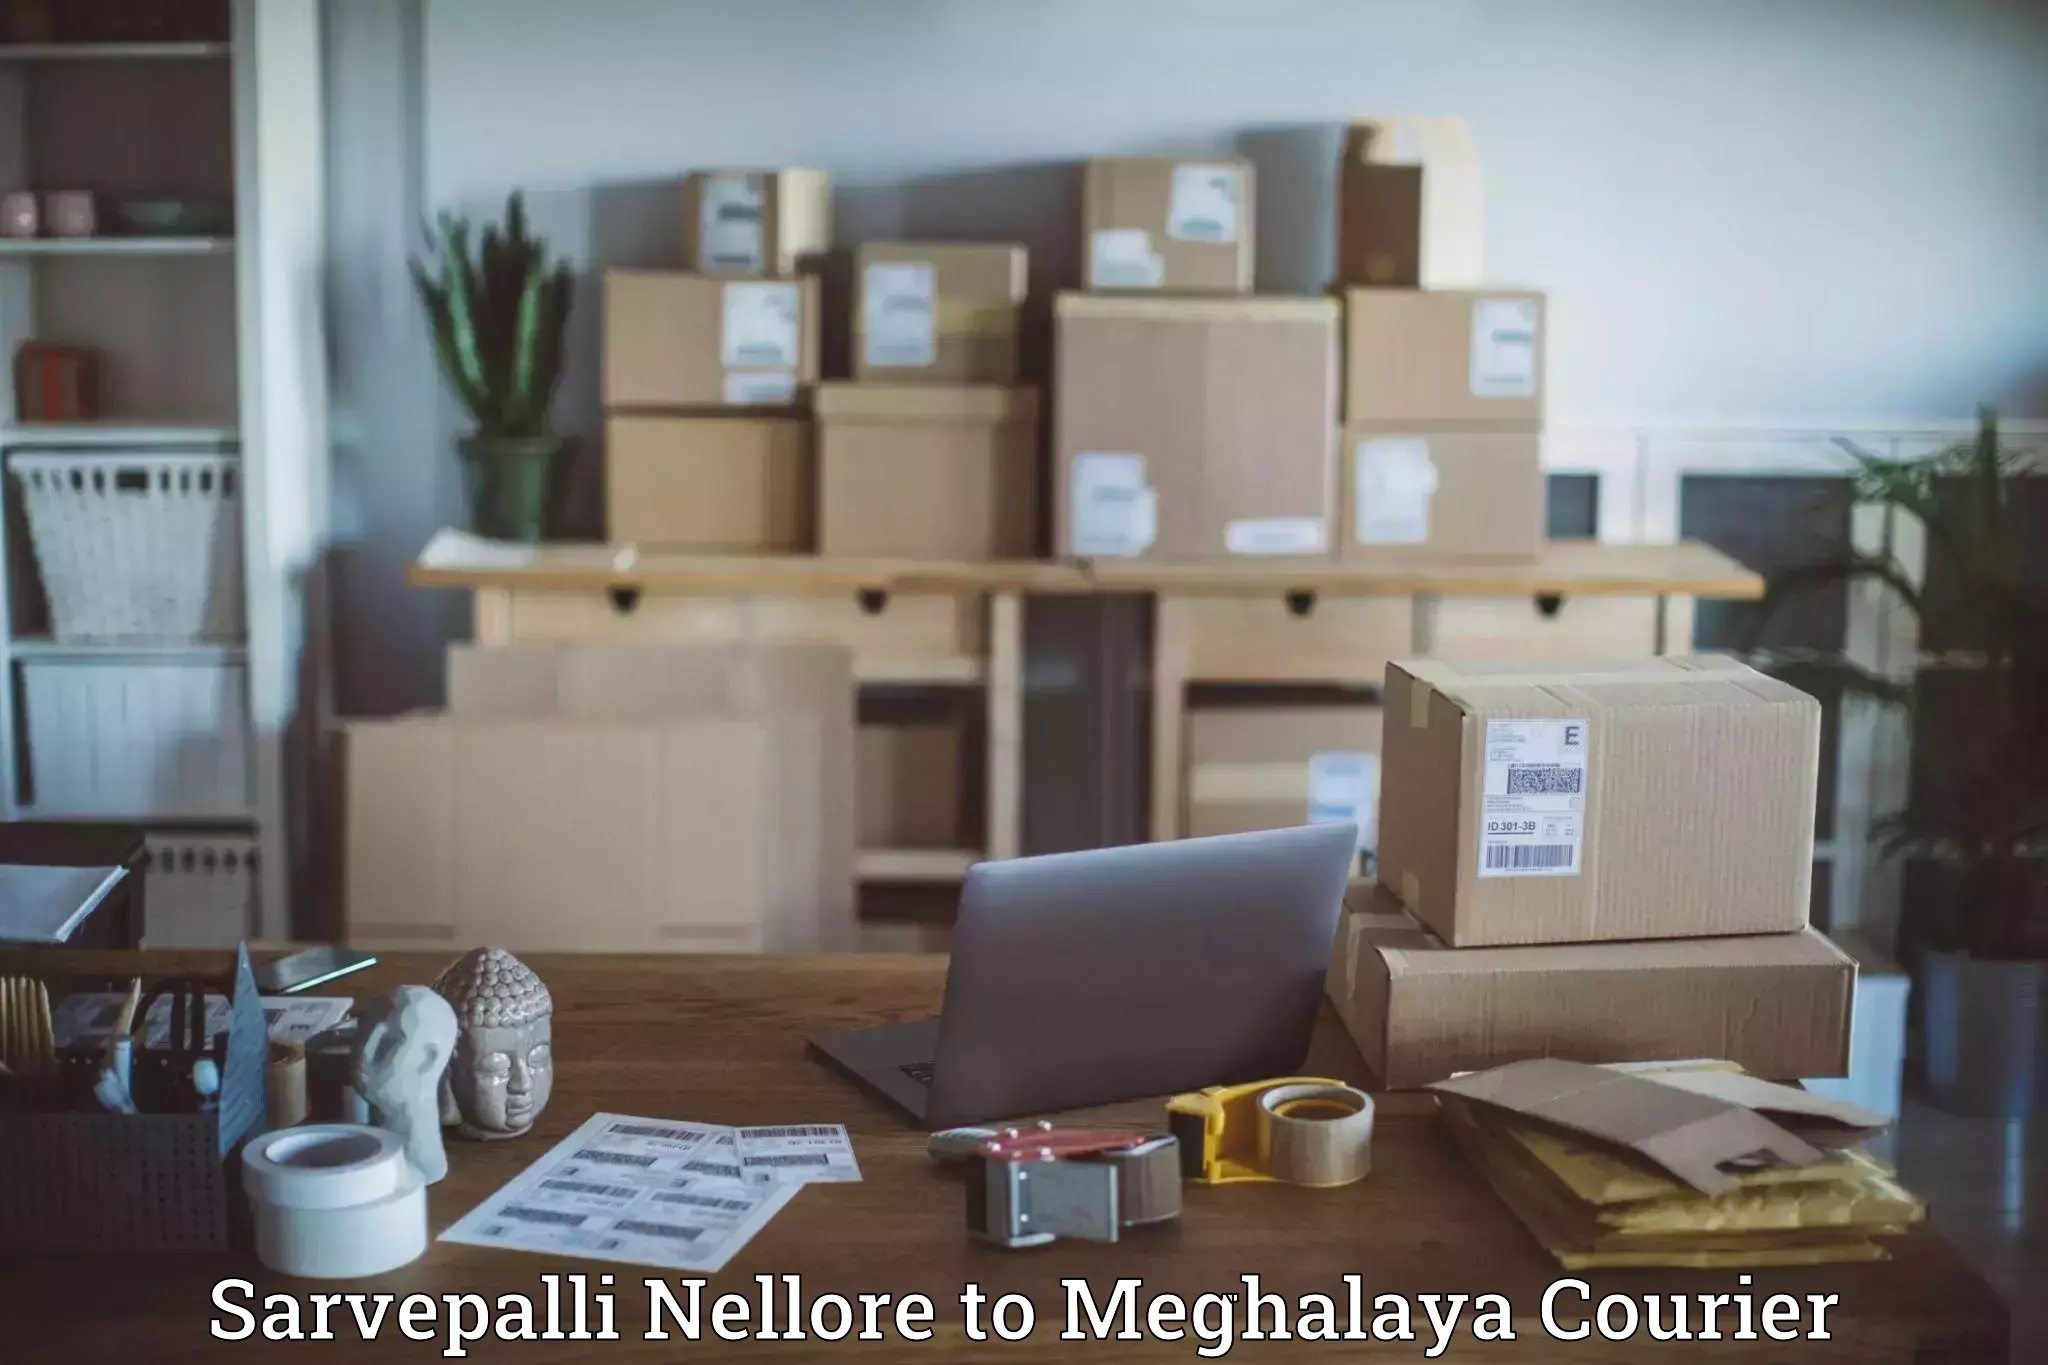 Affordable parcel service Sarvepalli Nellore to Shillong